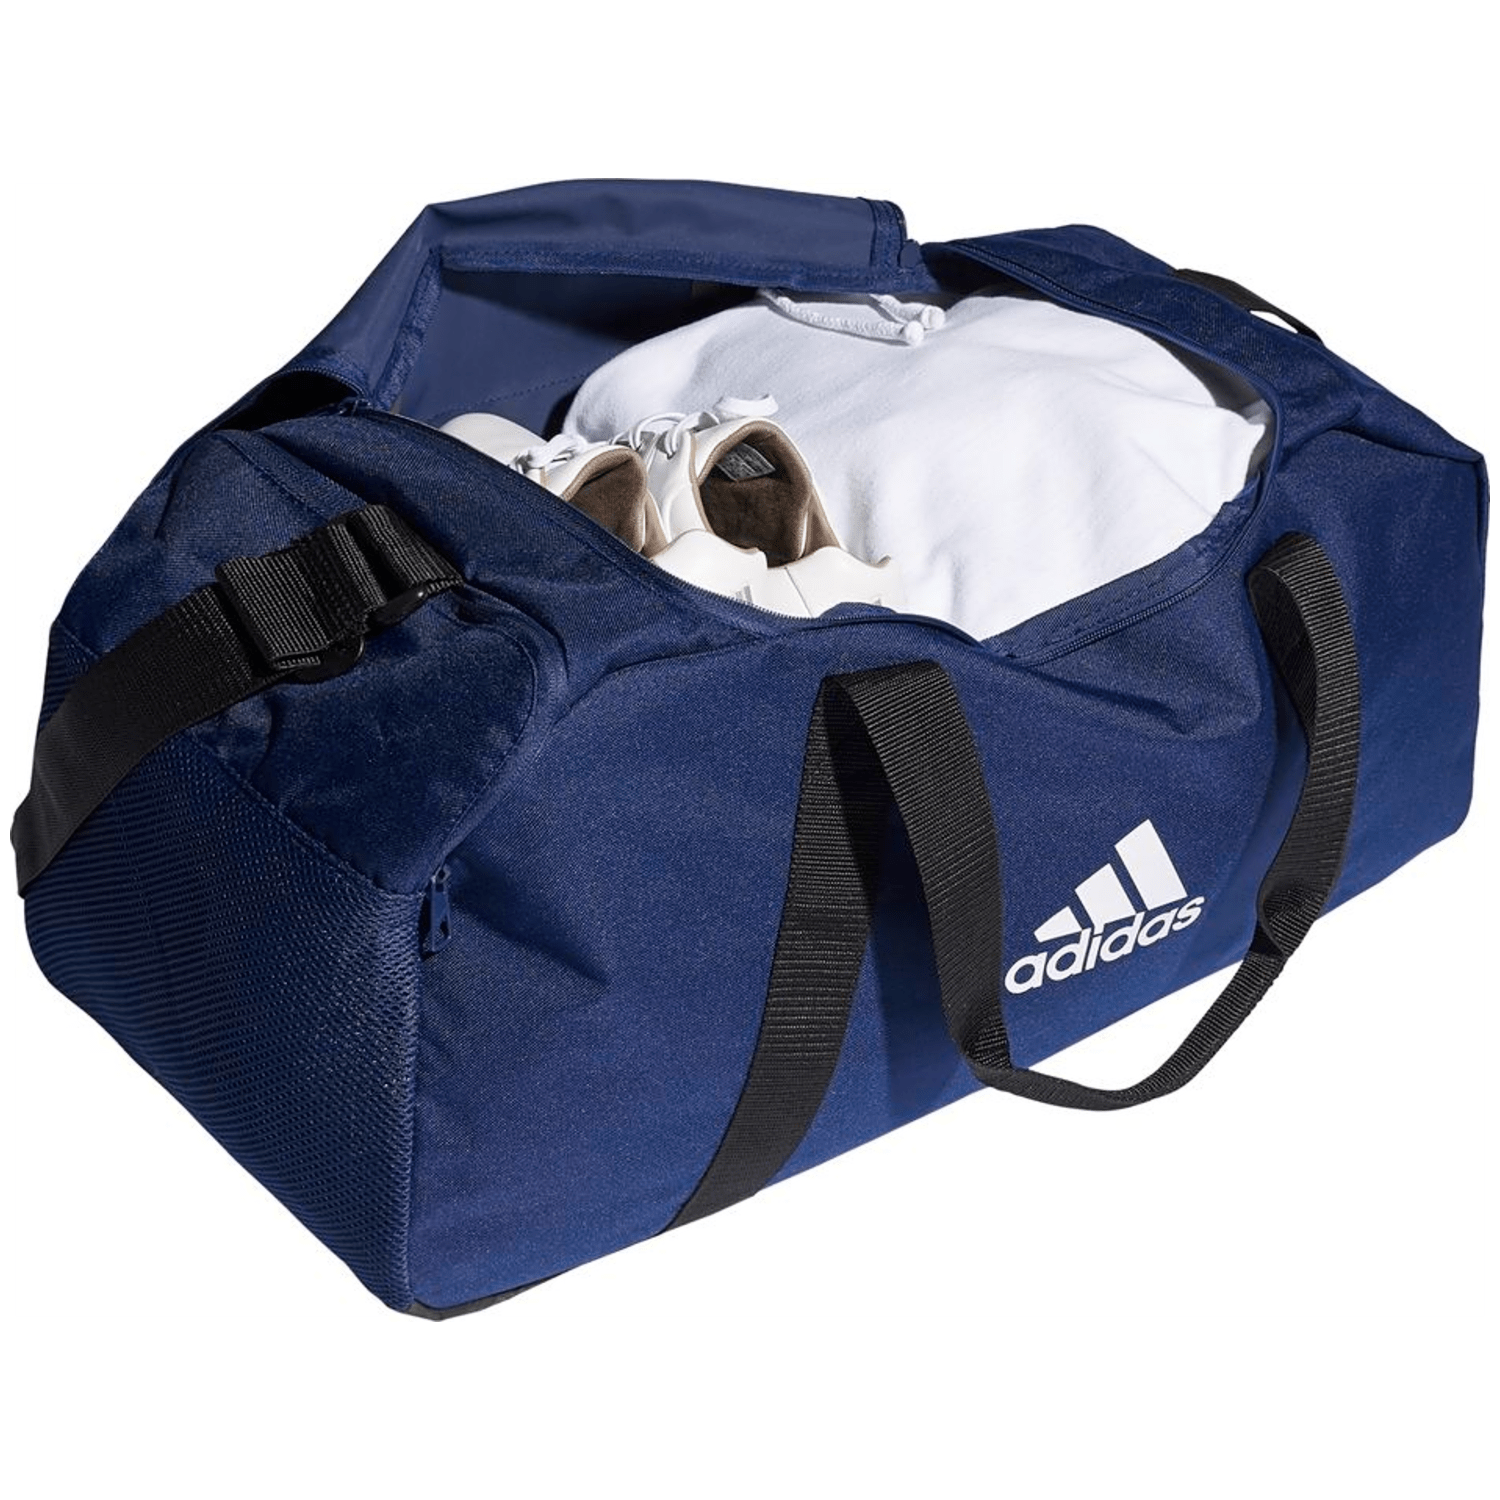 Adidas Tiro Primegreen Duffelbag M Unisex